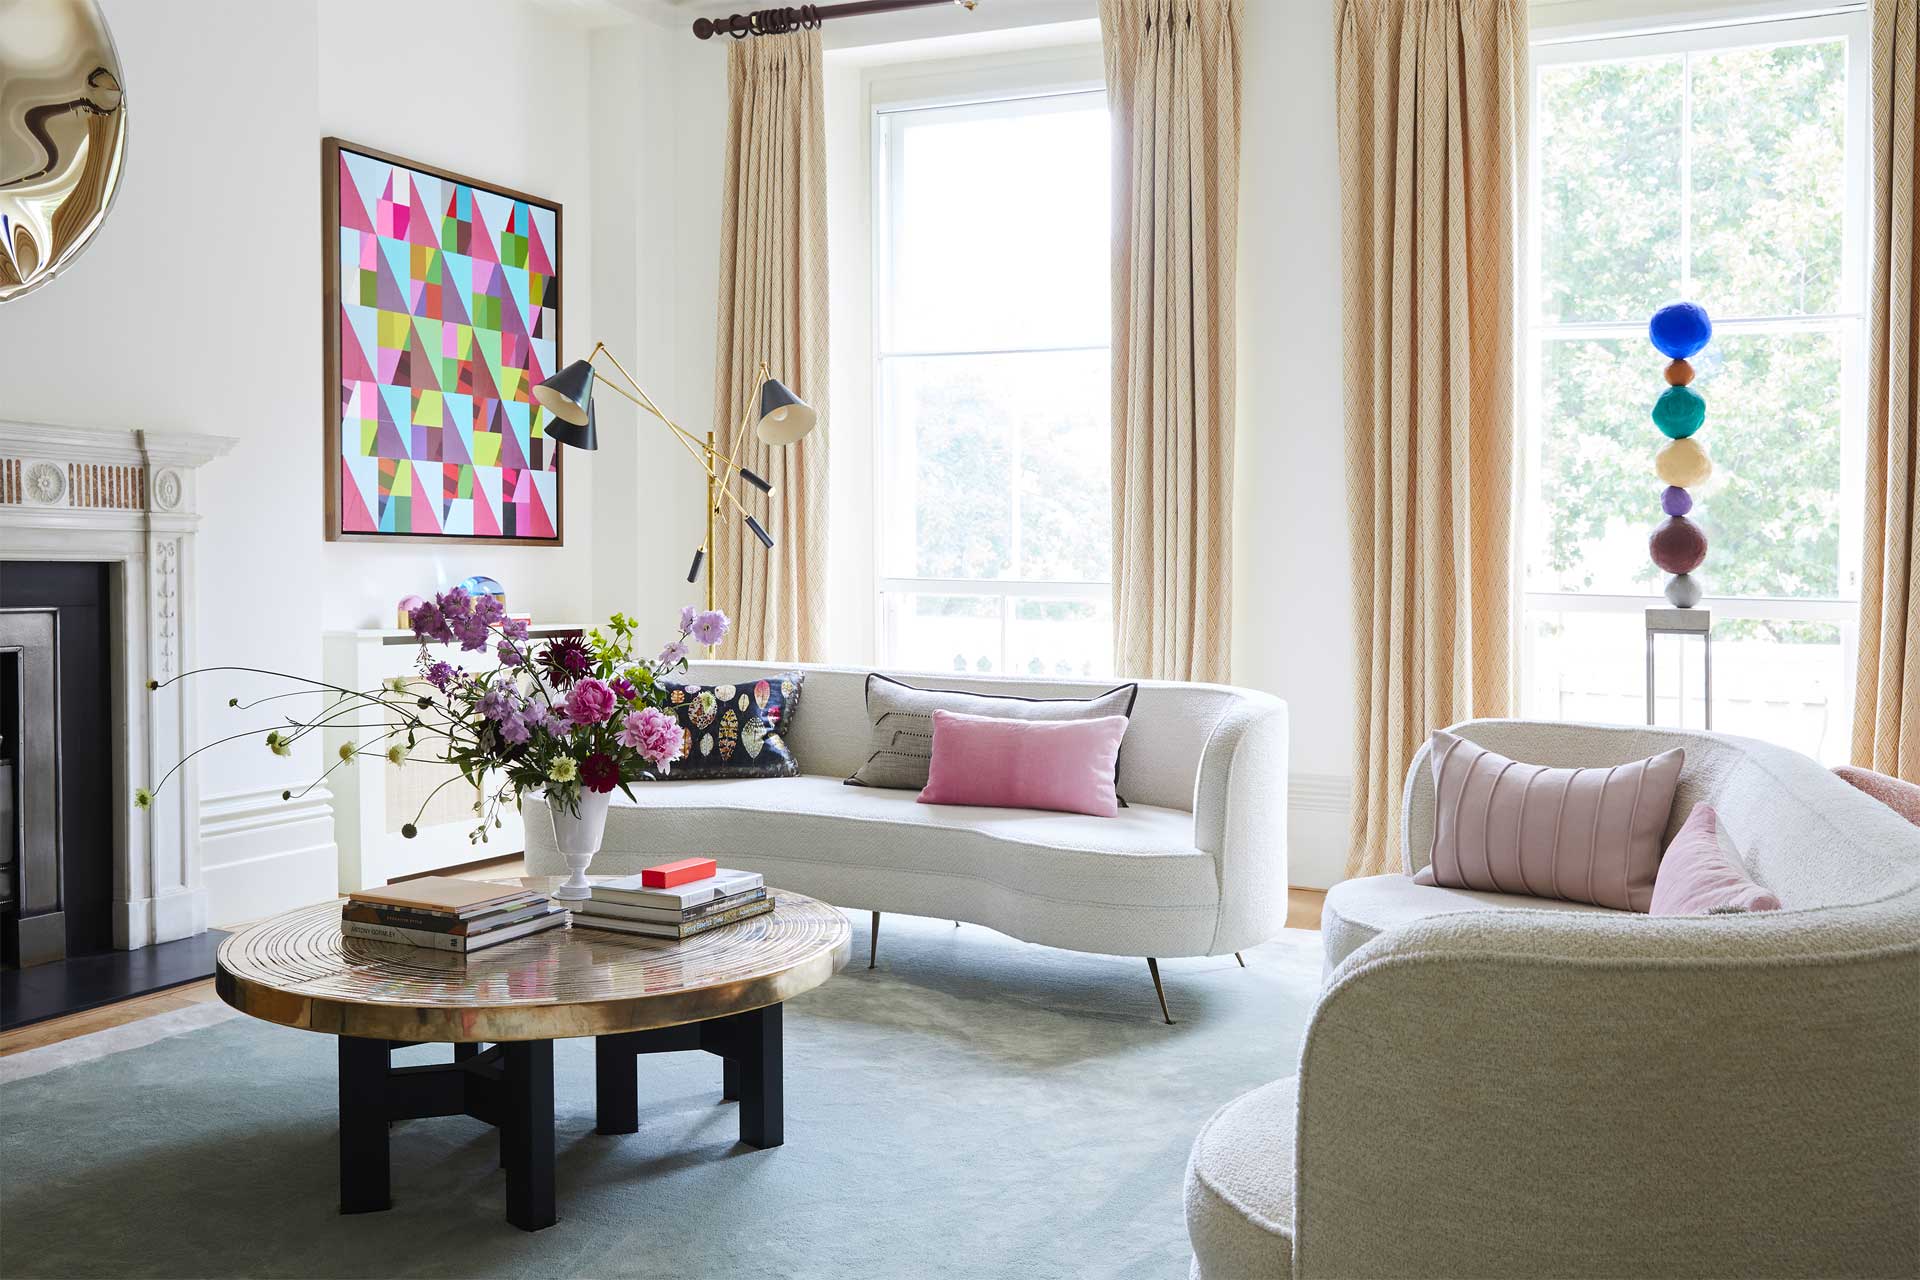 Miriam Frowein's living room - interior designer's home